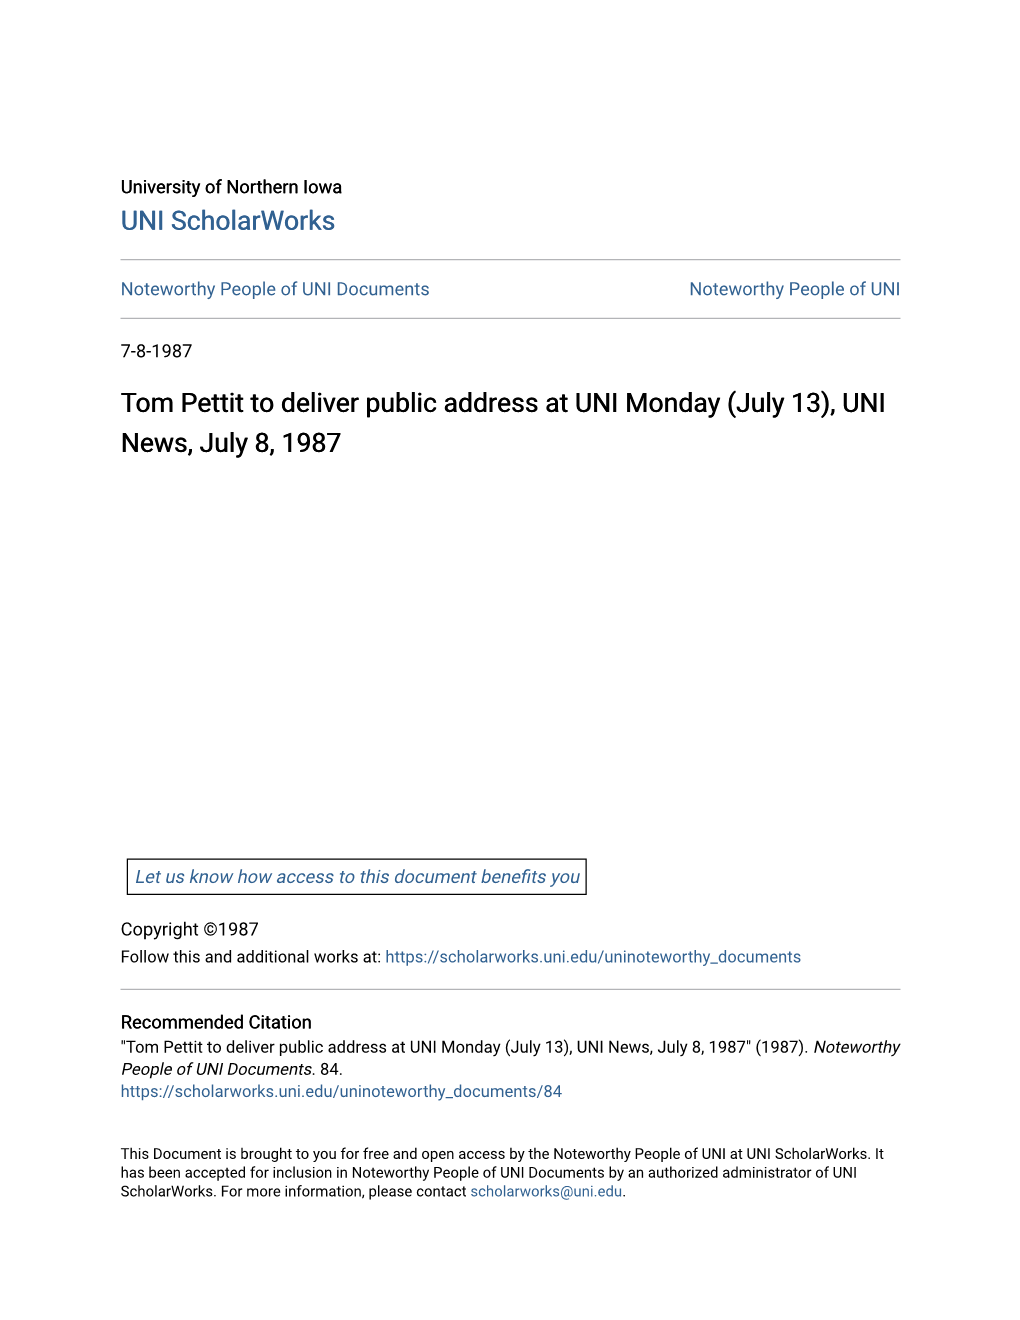 Tom Pettit to Deliver Public Address at UNI Monday (July 13), UNI News, July 8, 1987